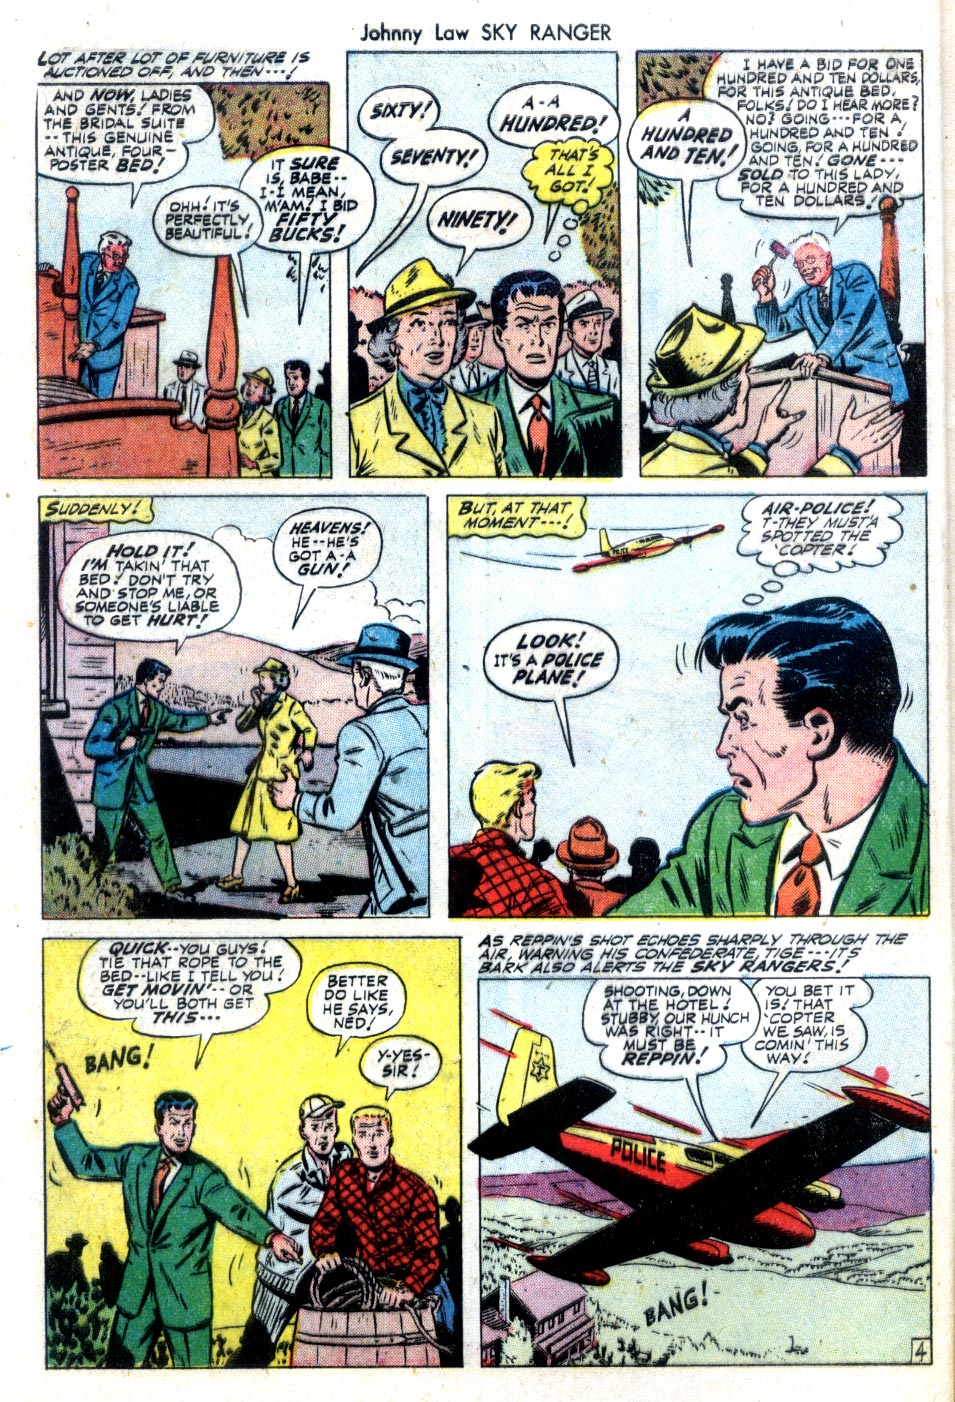 Read online Johnny Law Sky Ranger Adventures comic -  Issue #4 - 6